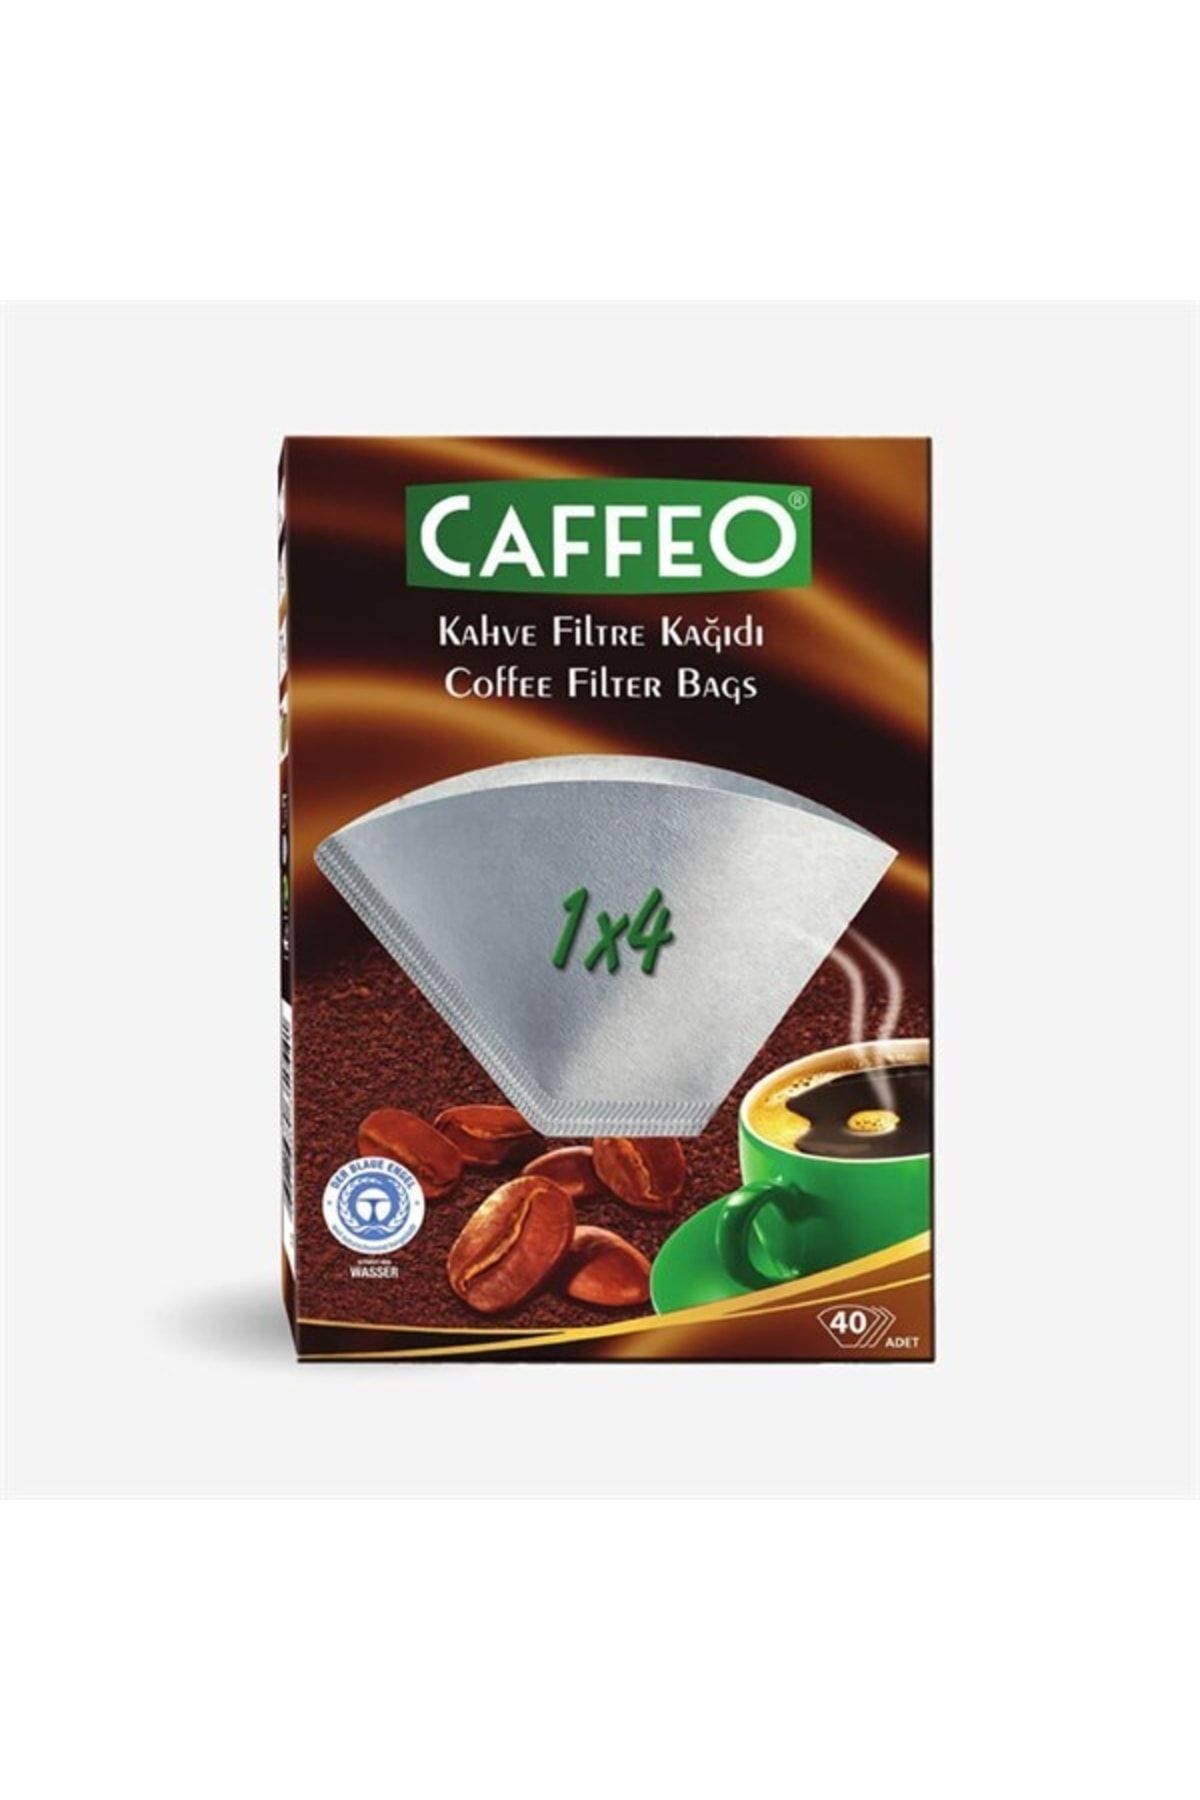 Caffeo Filtre Kahve Kağıdı 1x4 40'lı